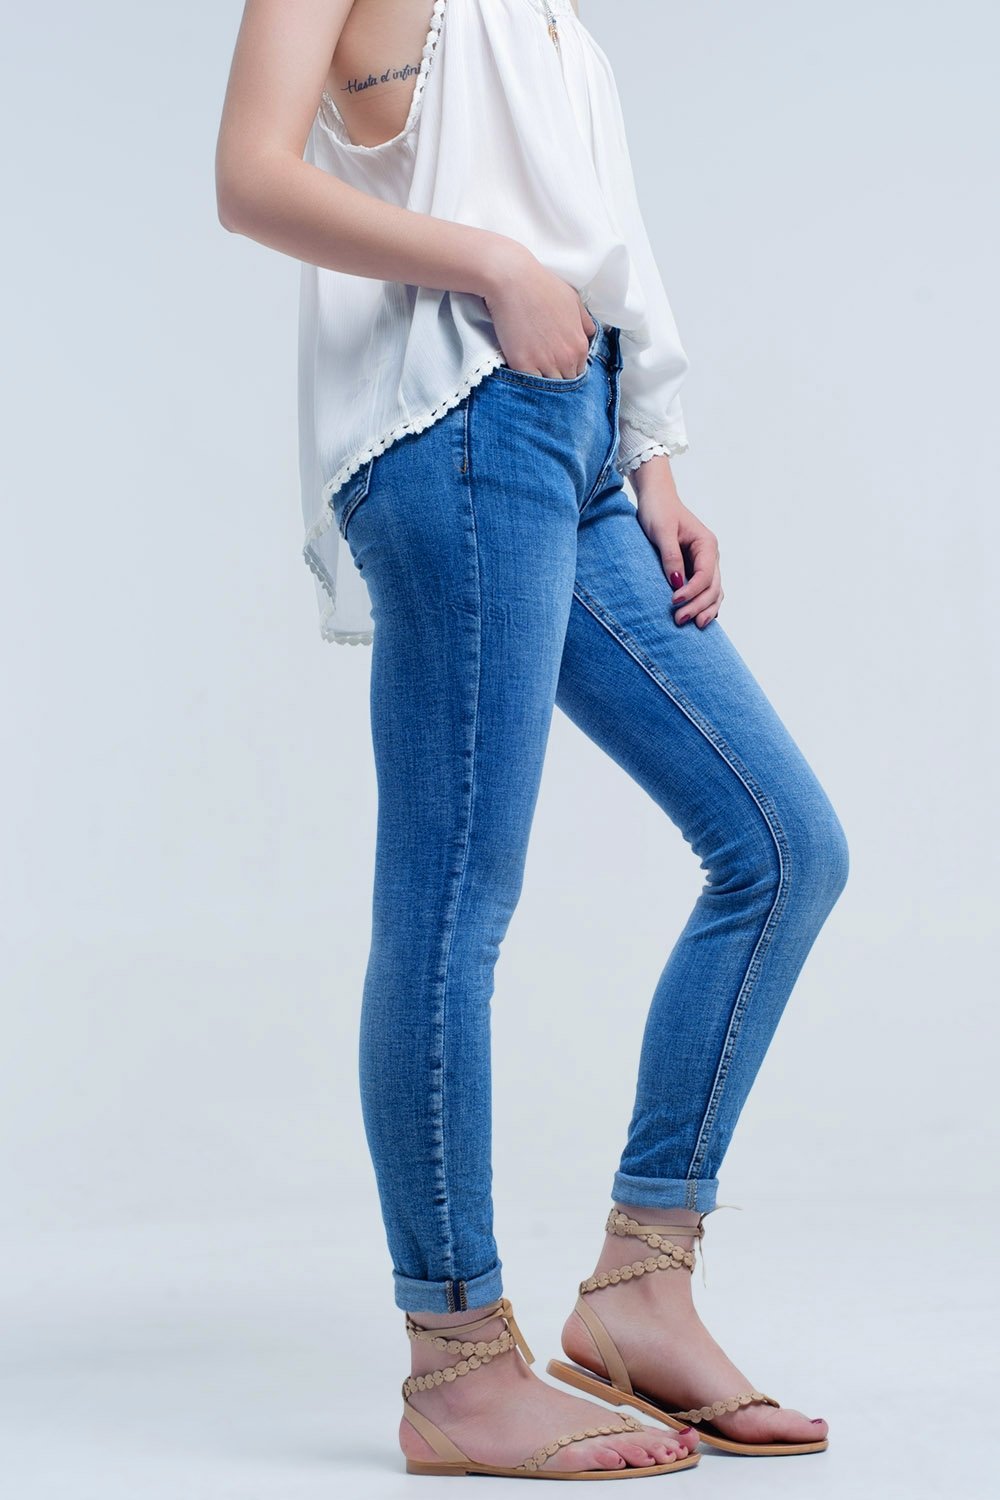 Women's Basic Jeans Pants with Functional Pockets - Women - Apparel - Pants - Jeans - Benn~Burry